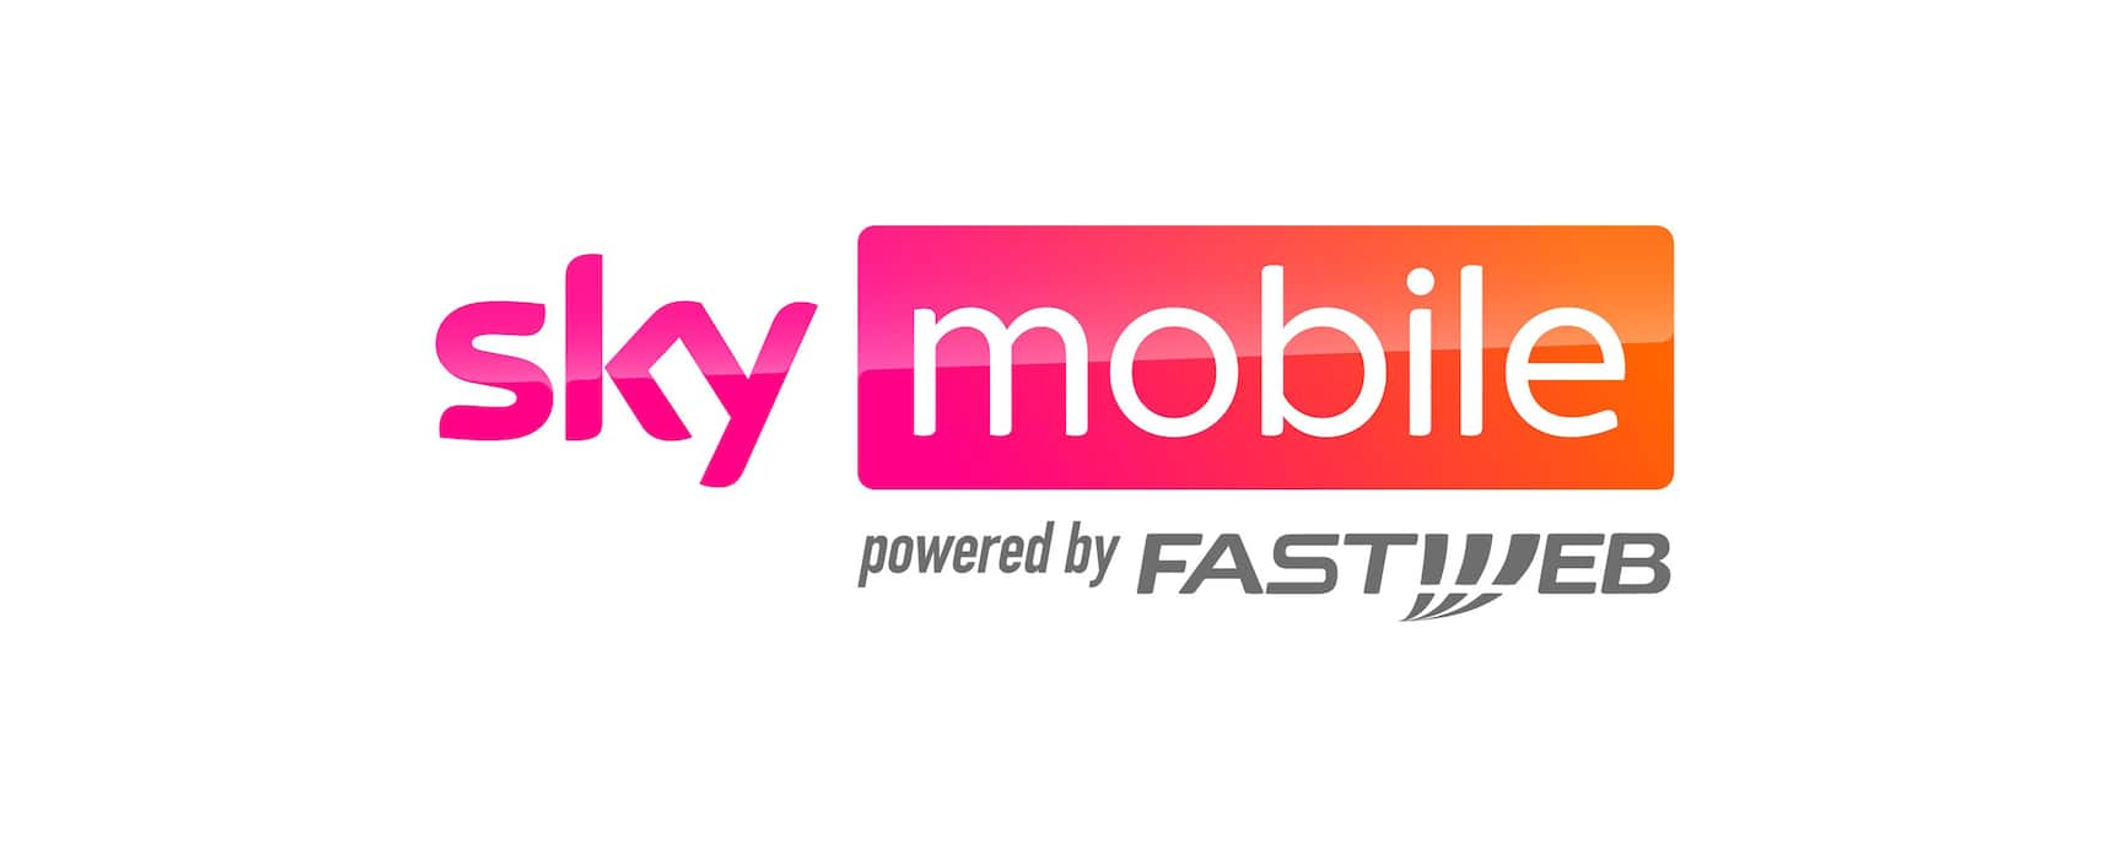 Sky Mobile powered by Fastweb: lancio UFFICIALE il 29 febbraio